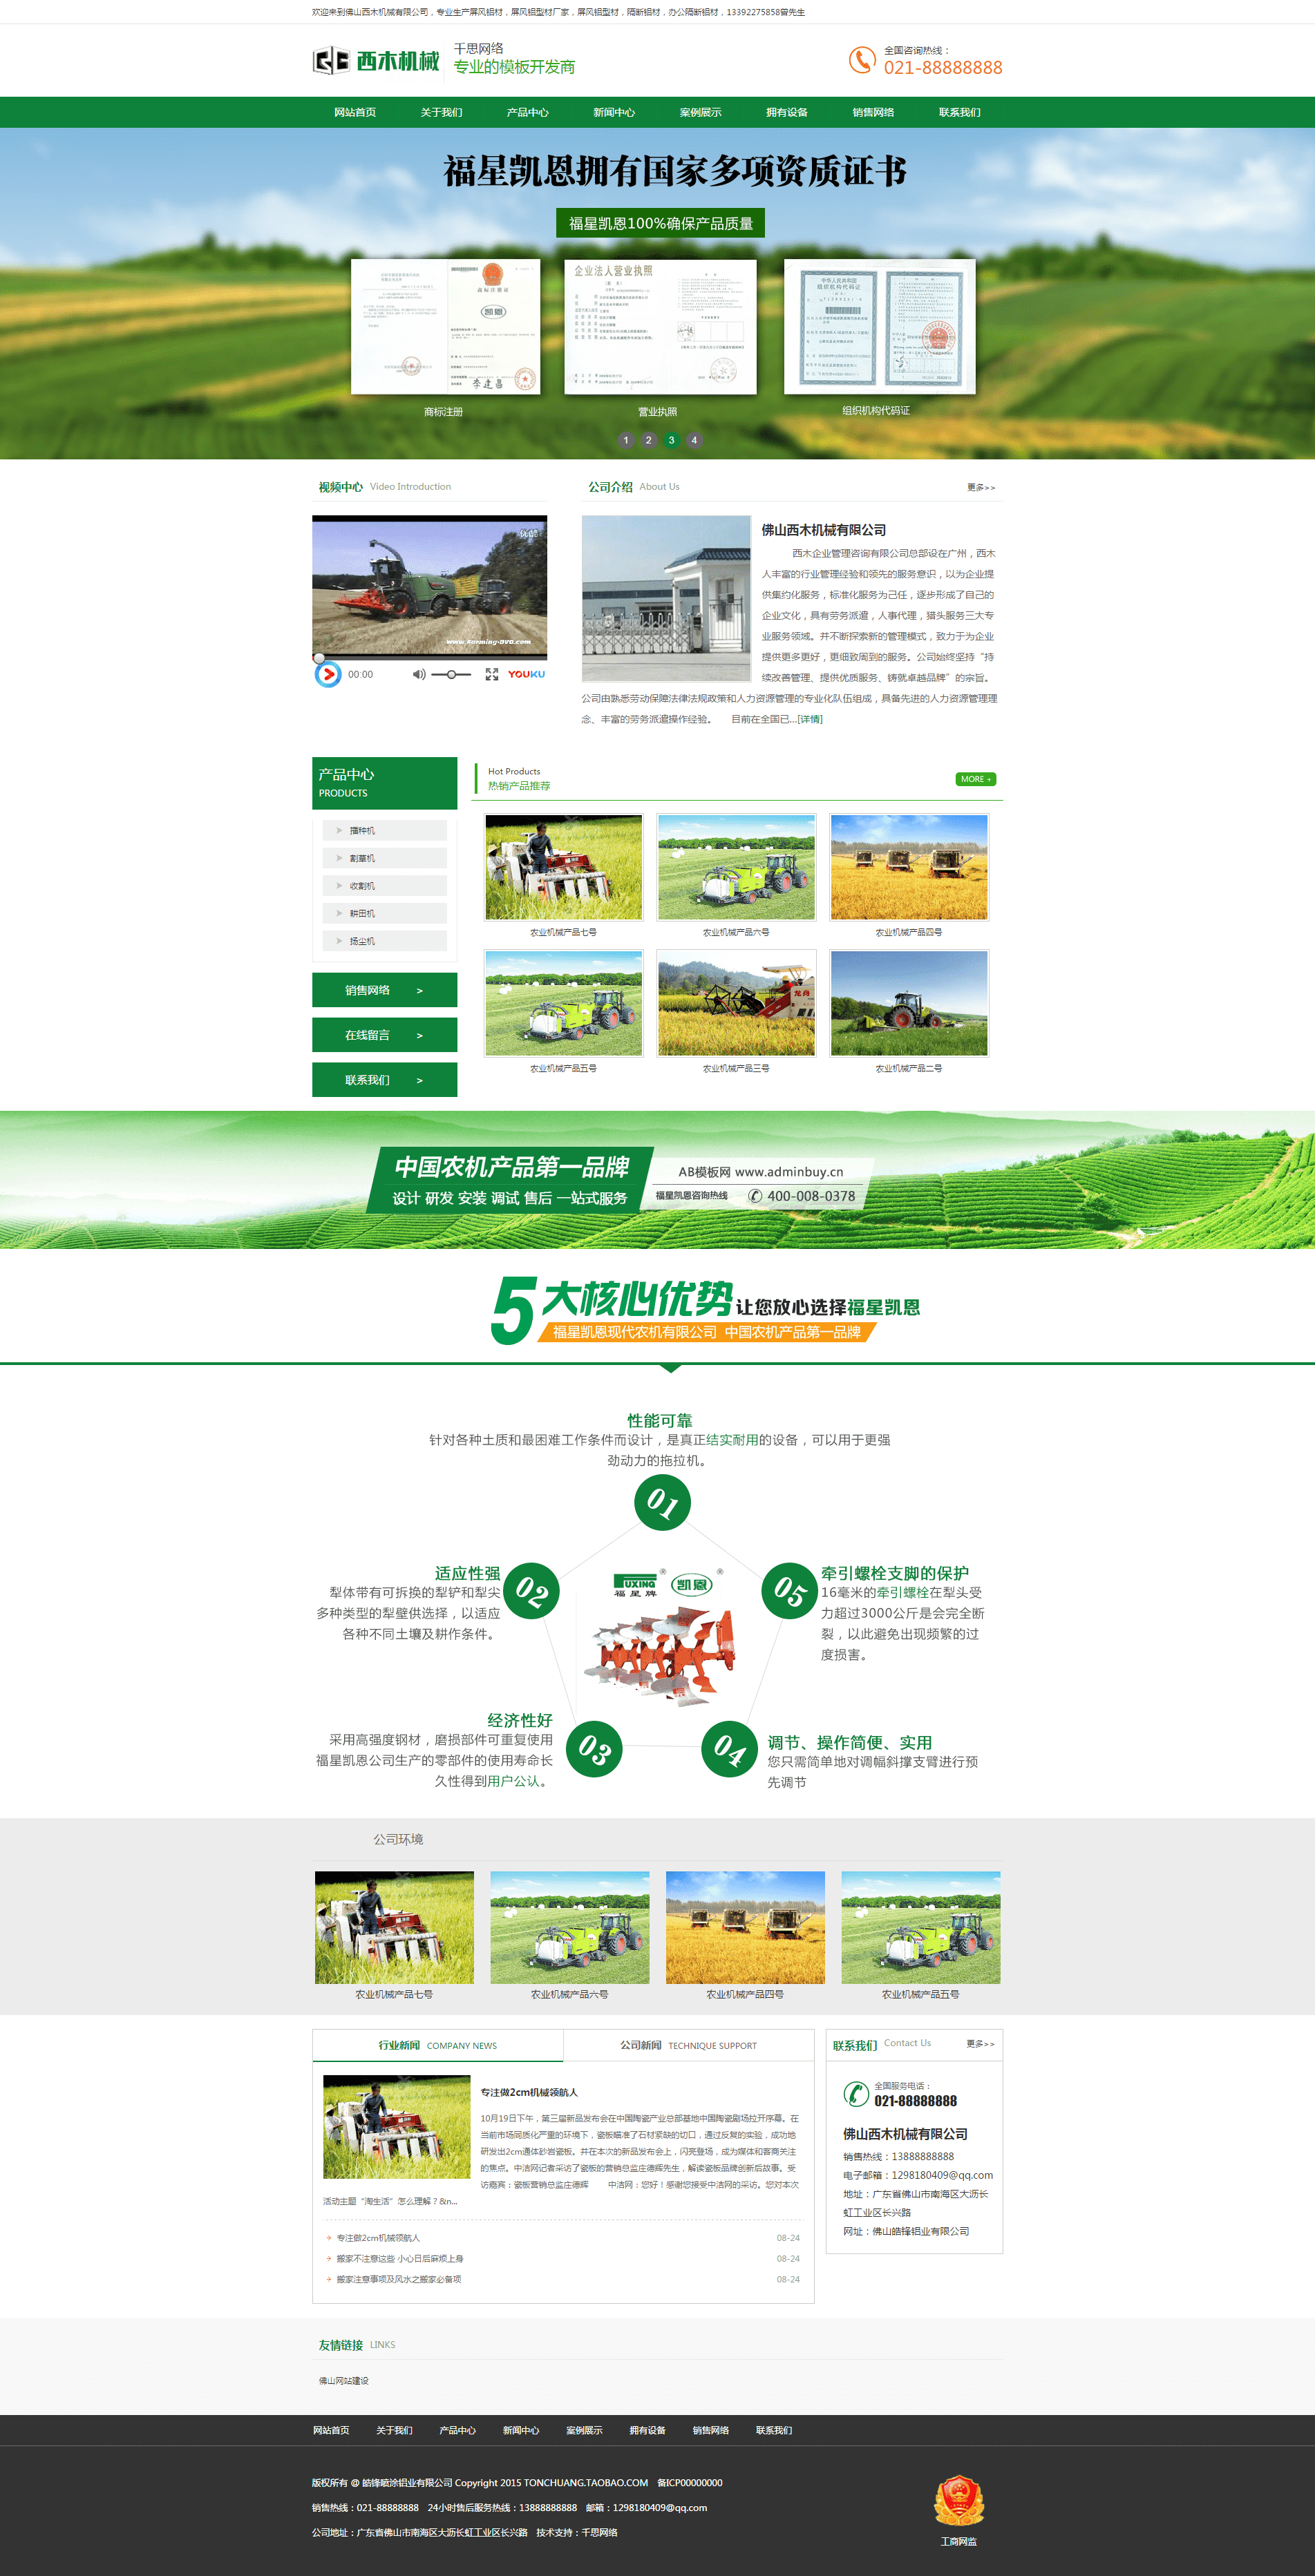 Aspcms绿色农业机械